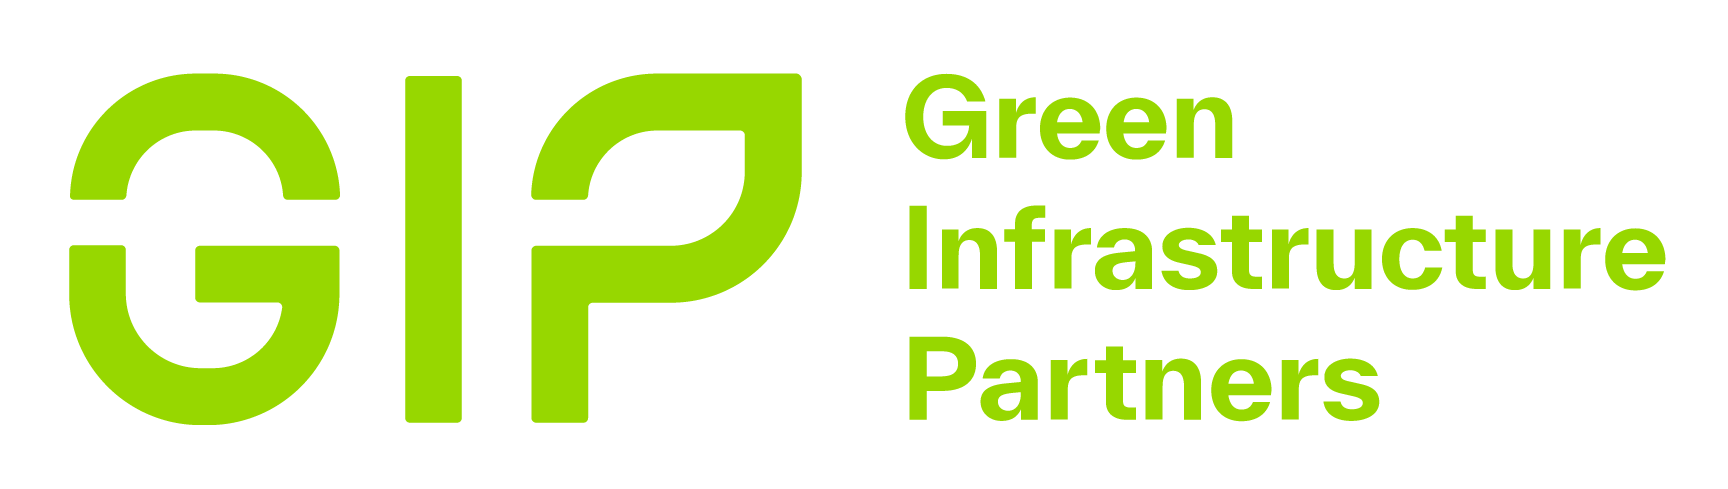 Green Infrastructure Partners